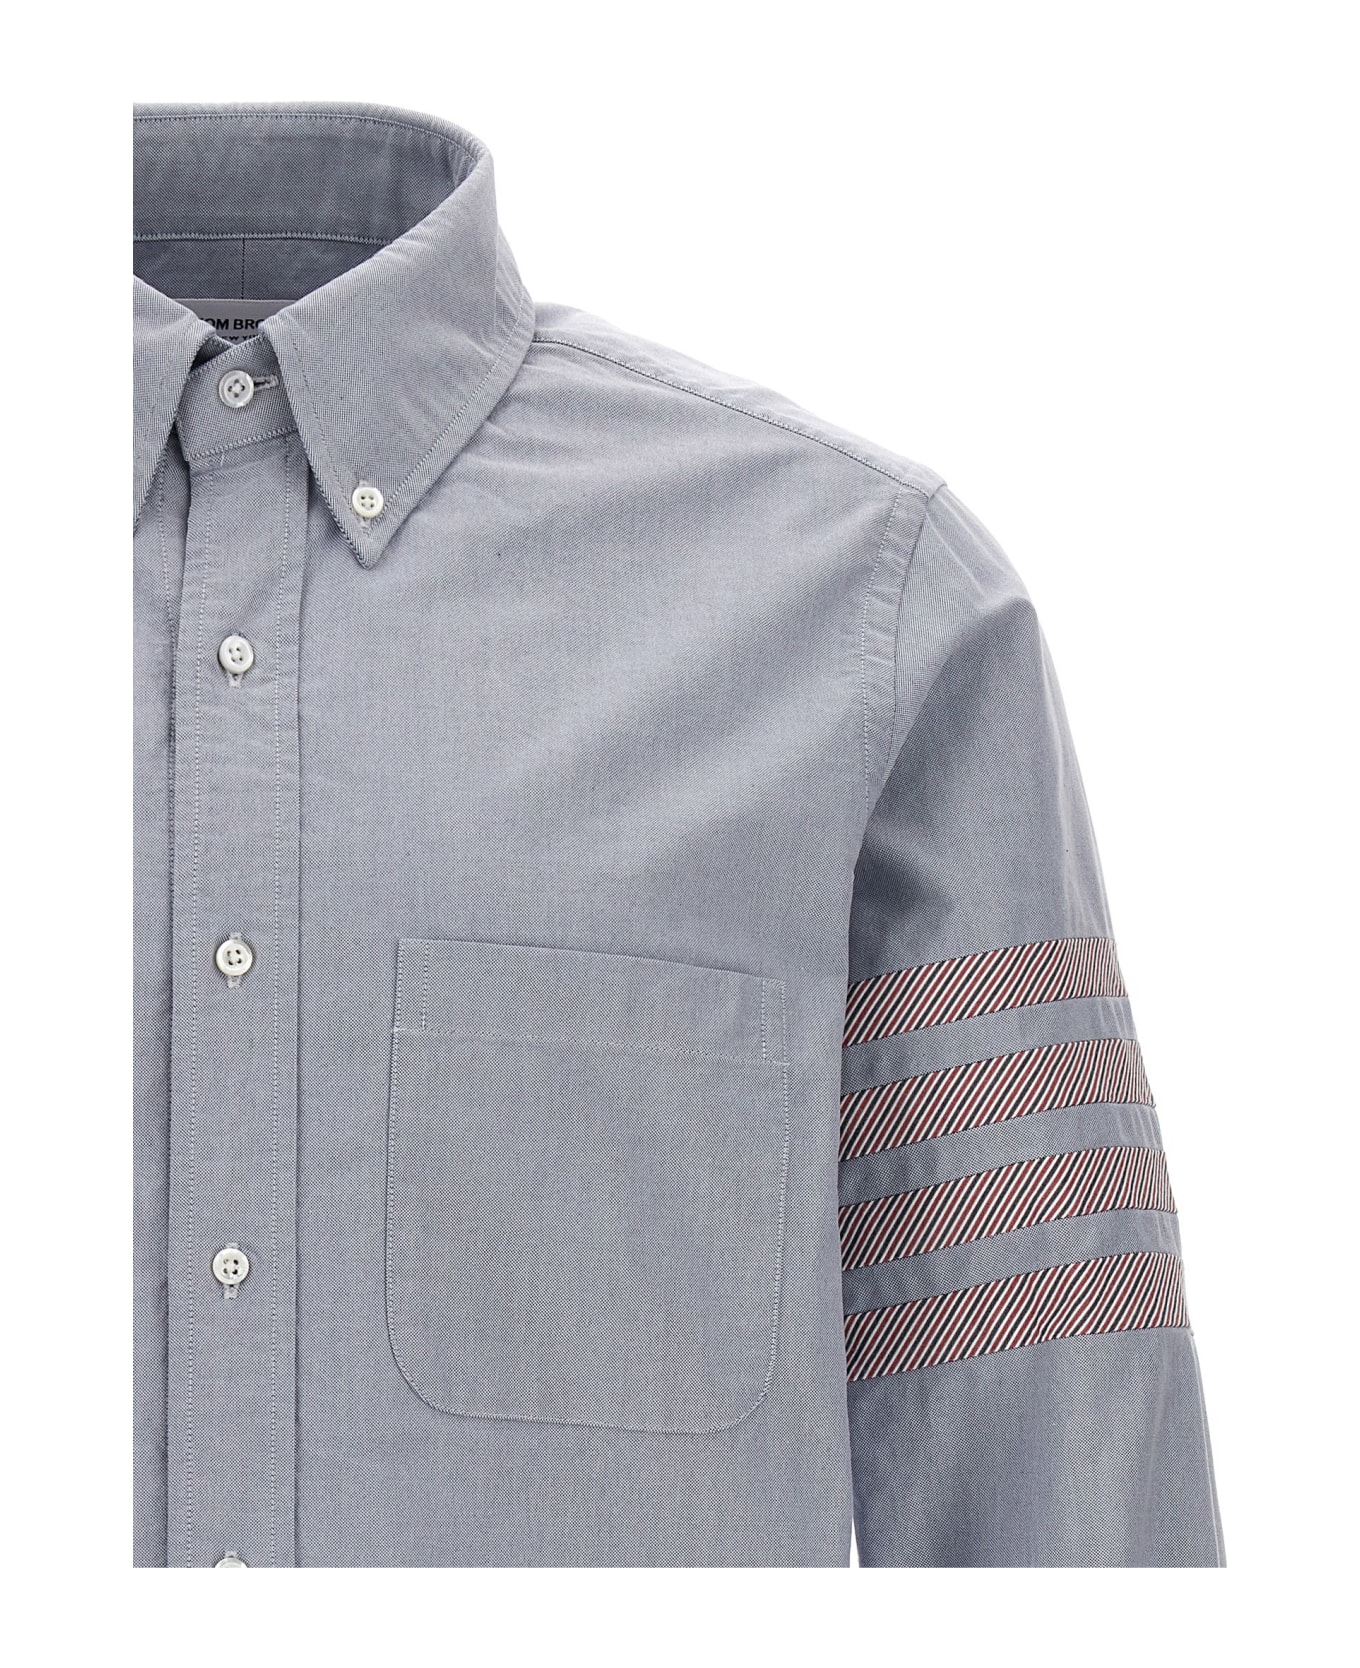 Thom Browne '4 Bar' Shirt - Light Blue